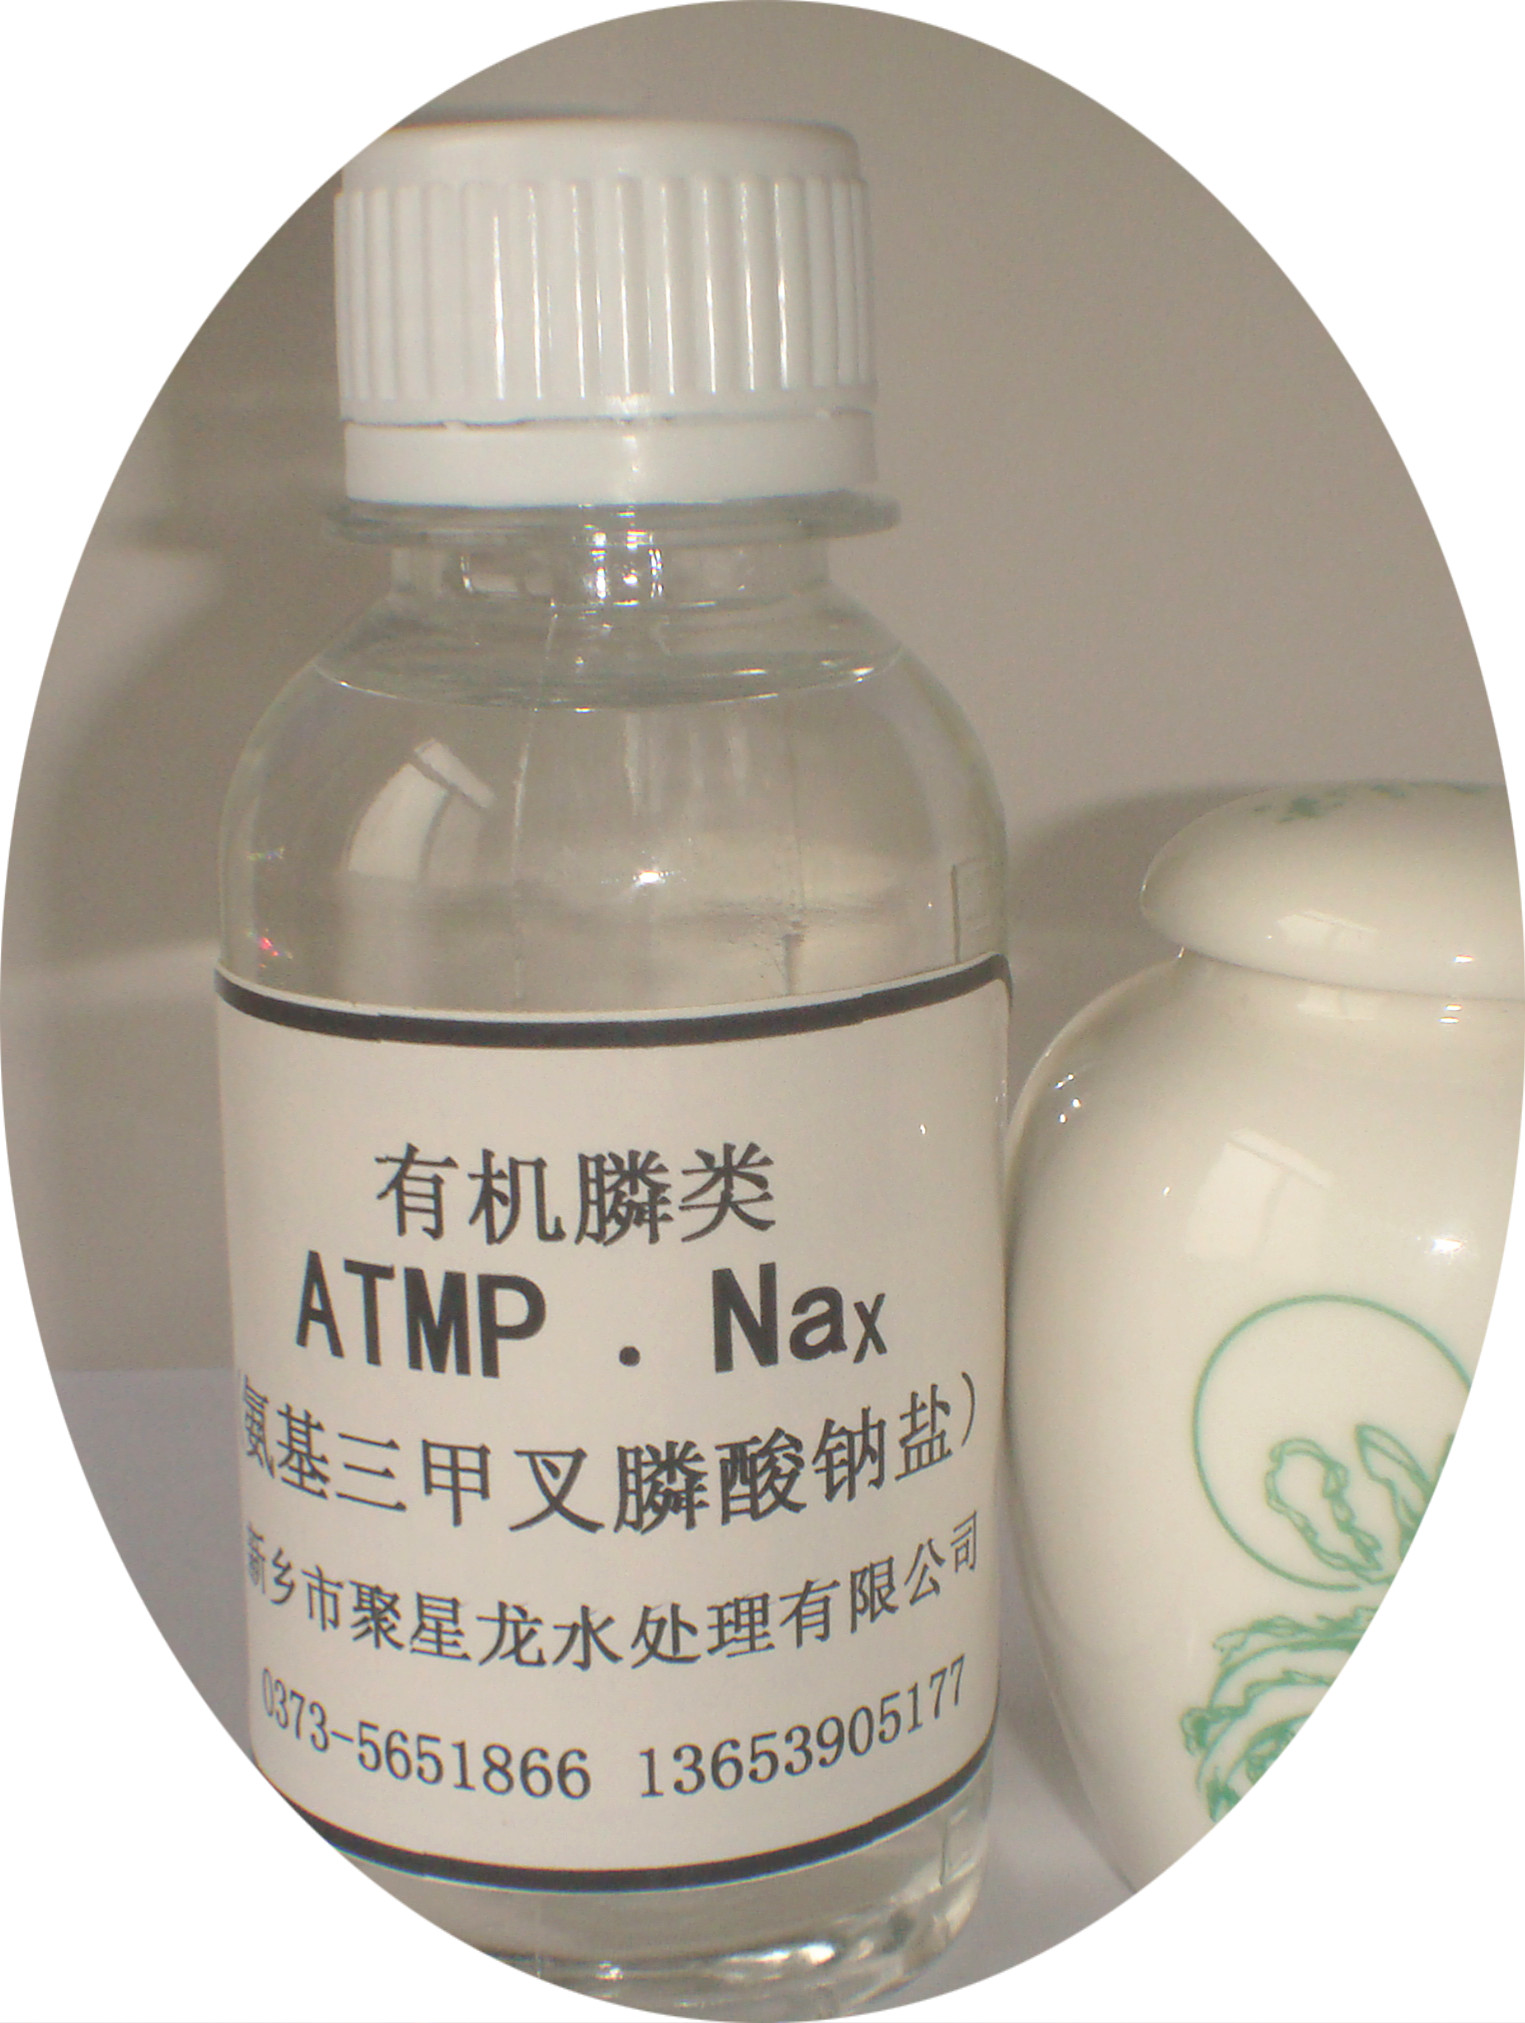 Jxl-5011 sodium aminotrimethylene phosphonate (ATMP. NaX)